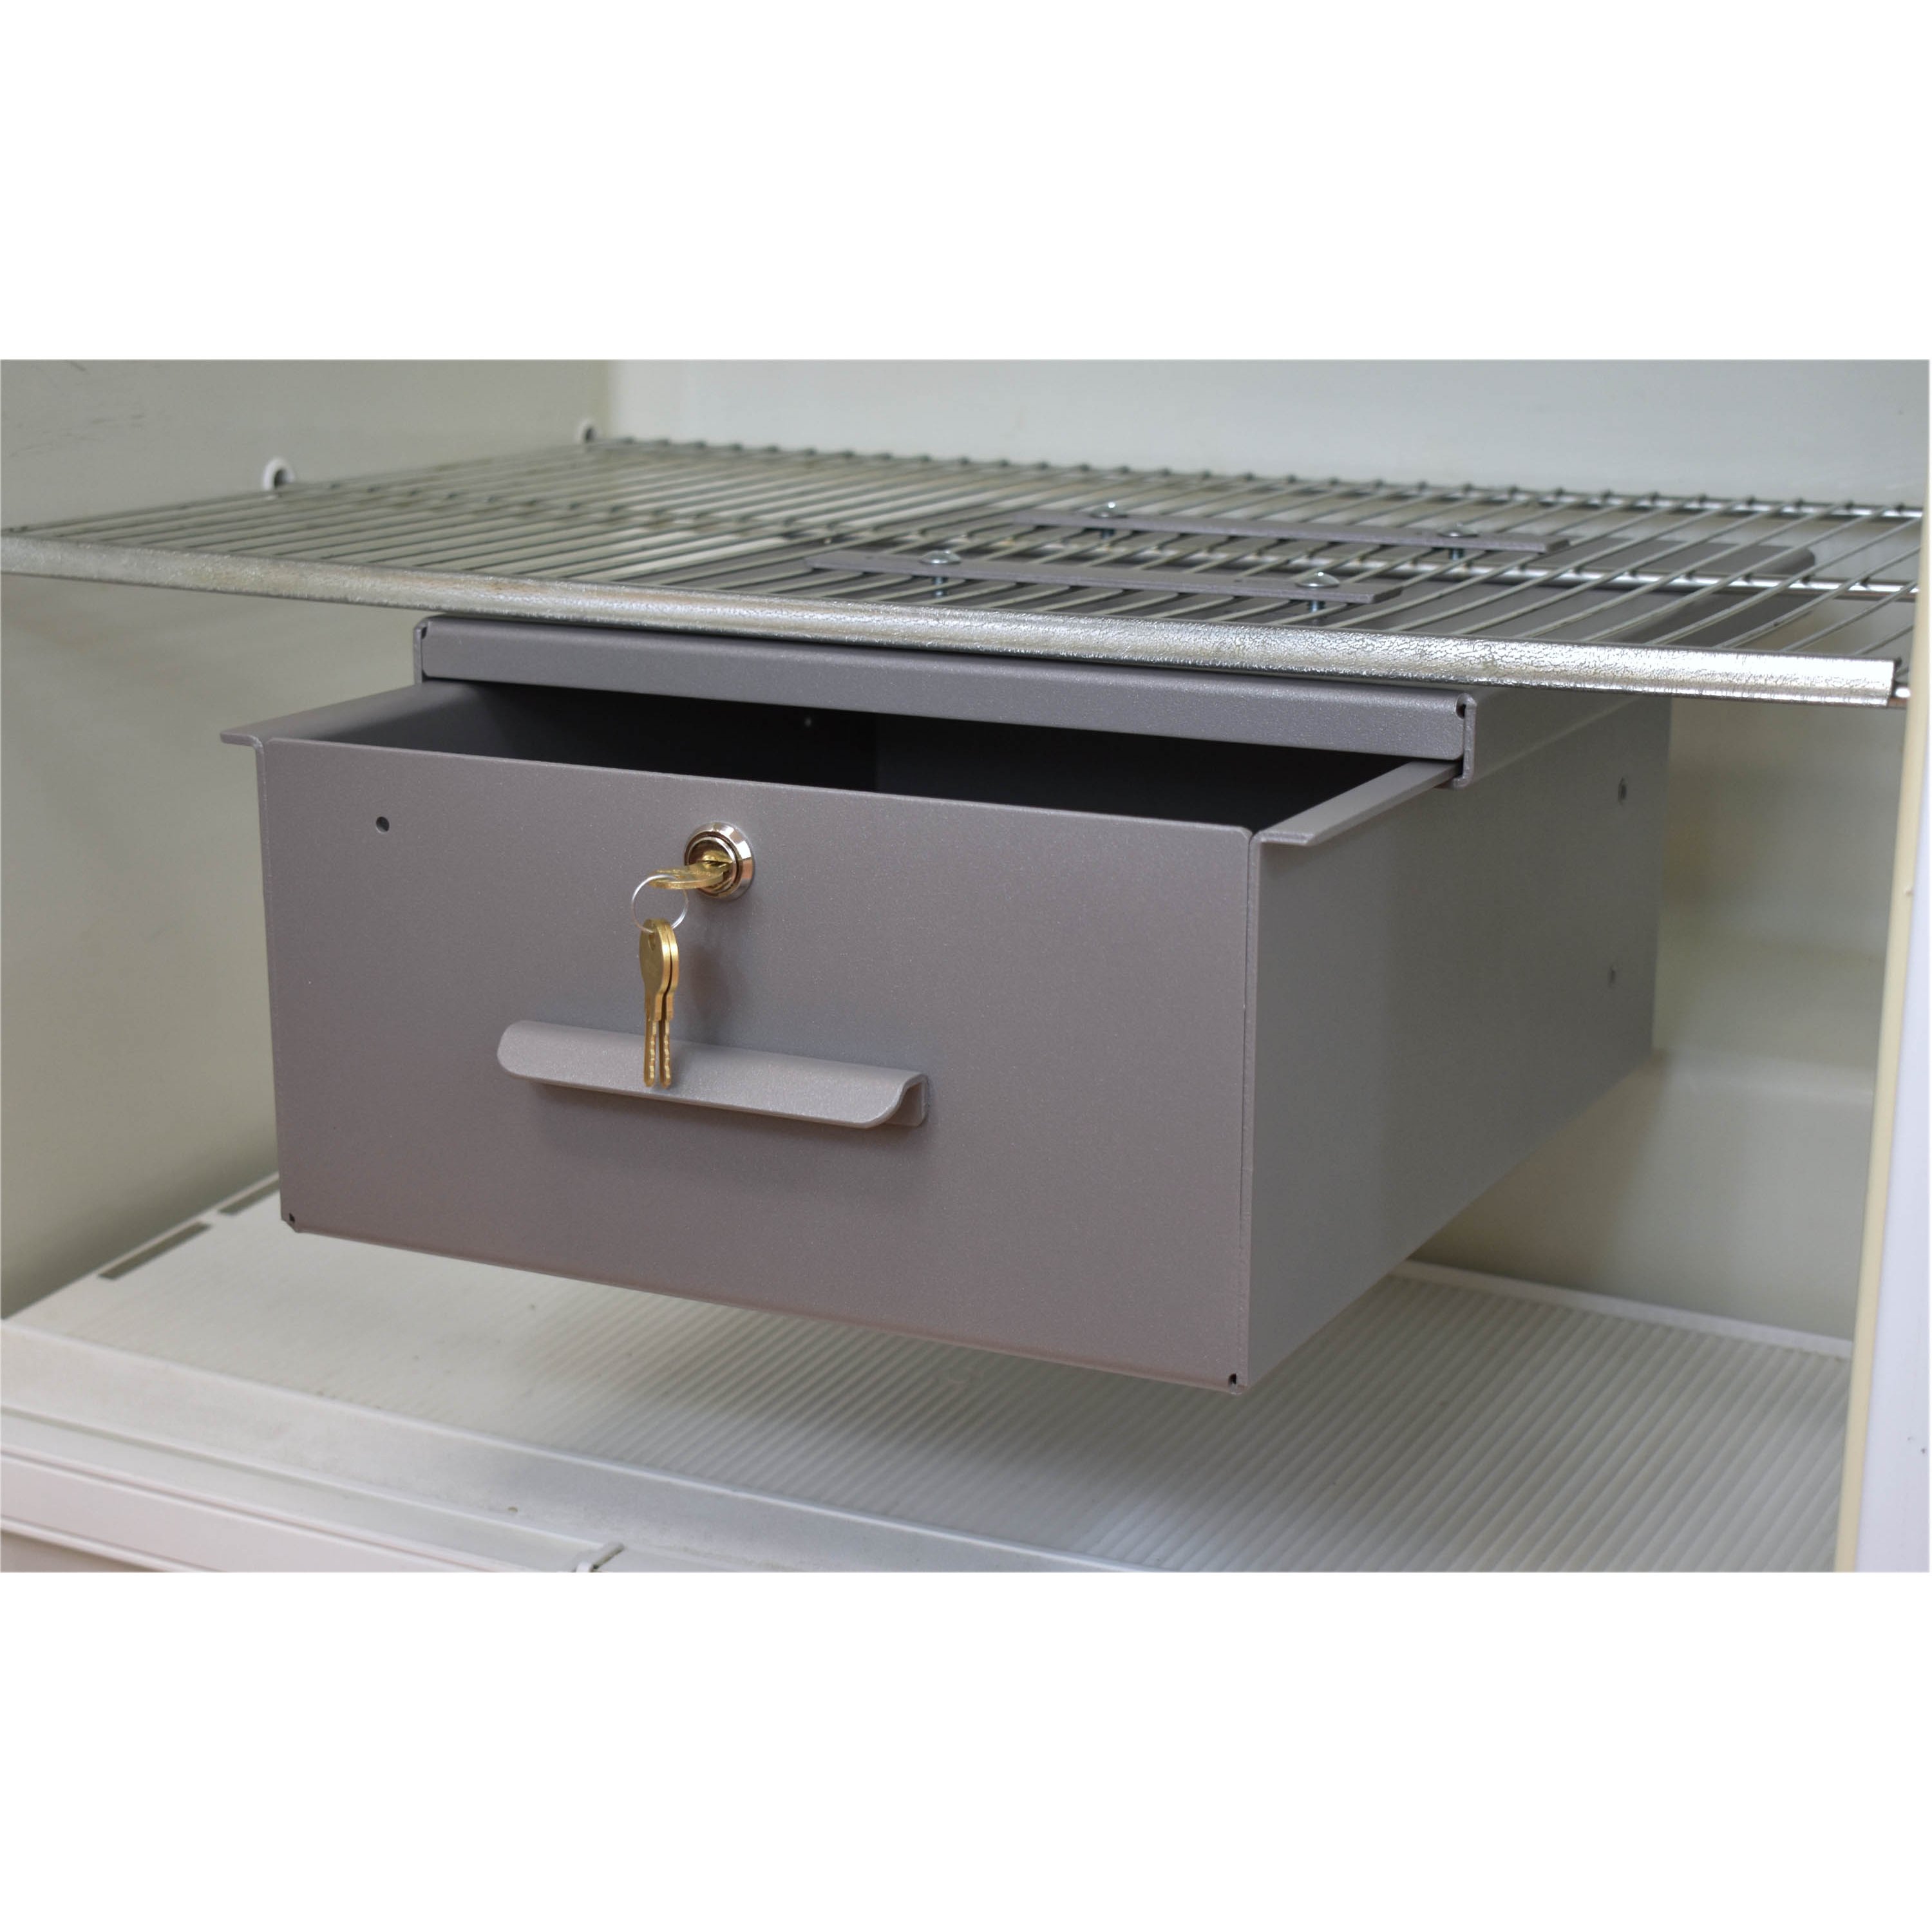 Item 18541 - Tilting Refrigerator Box, Key Lock